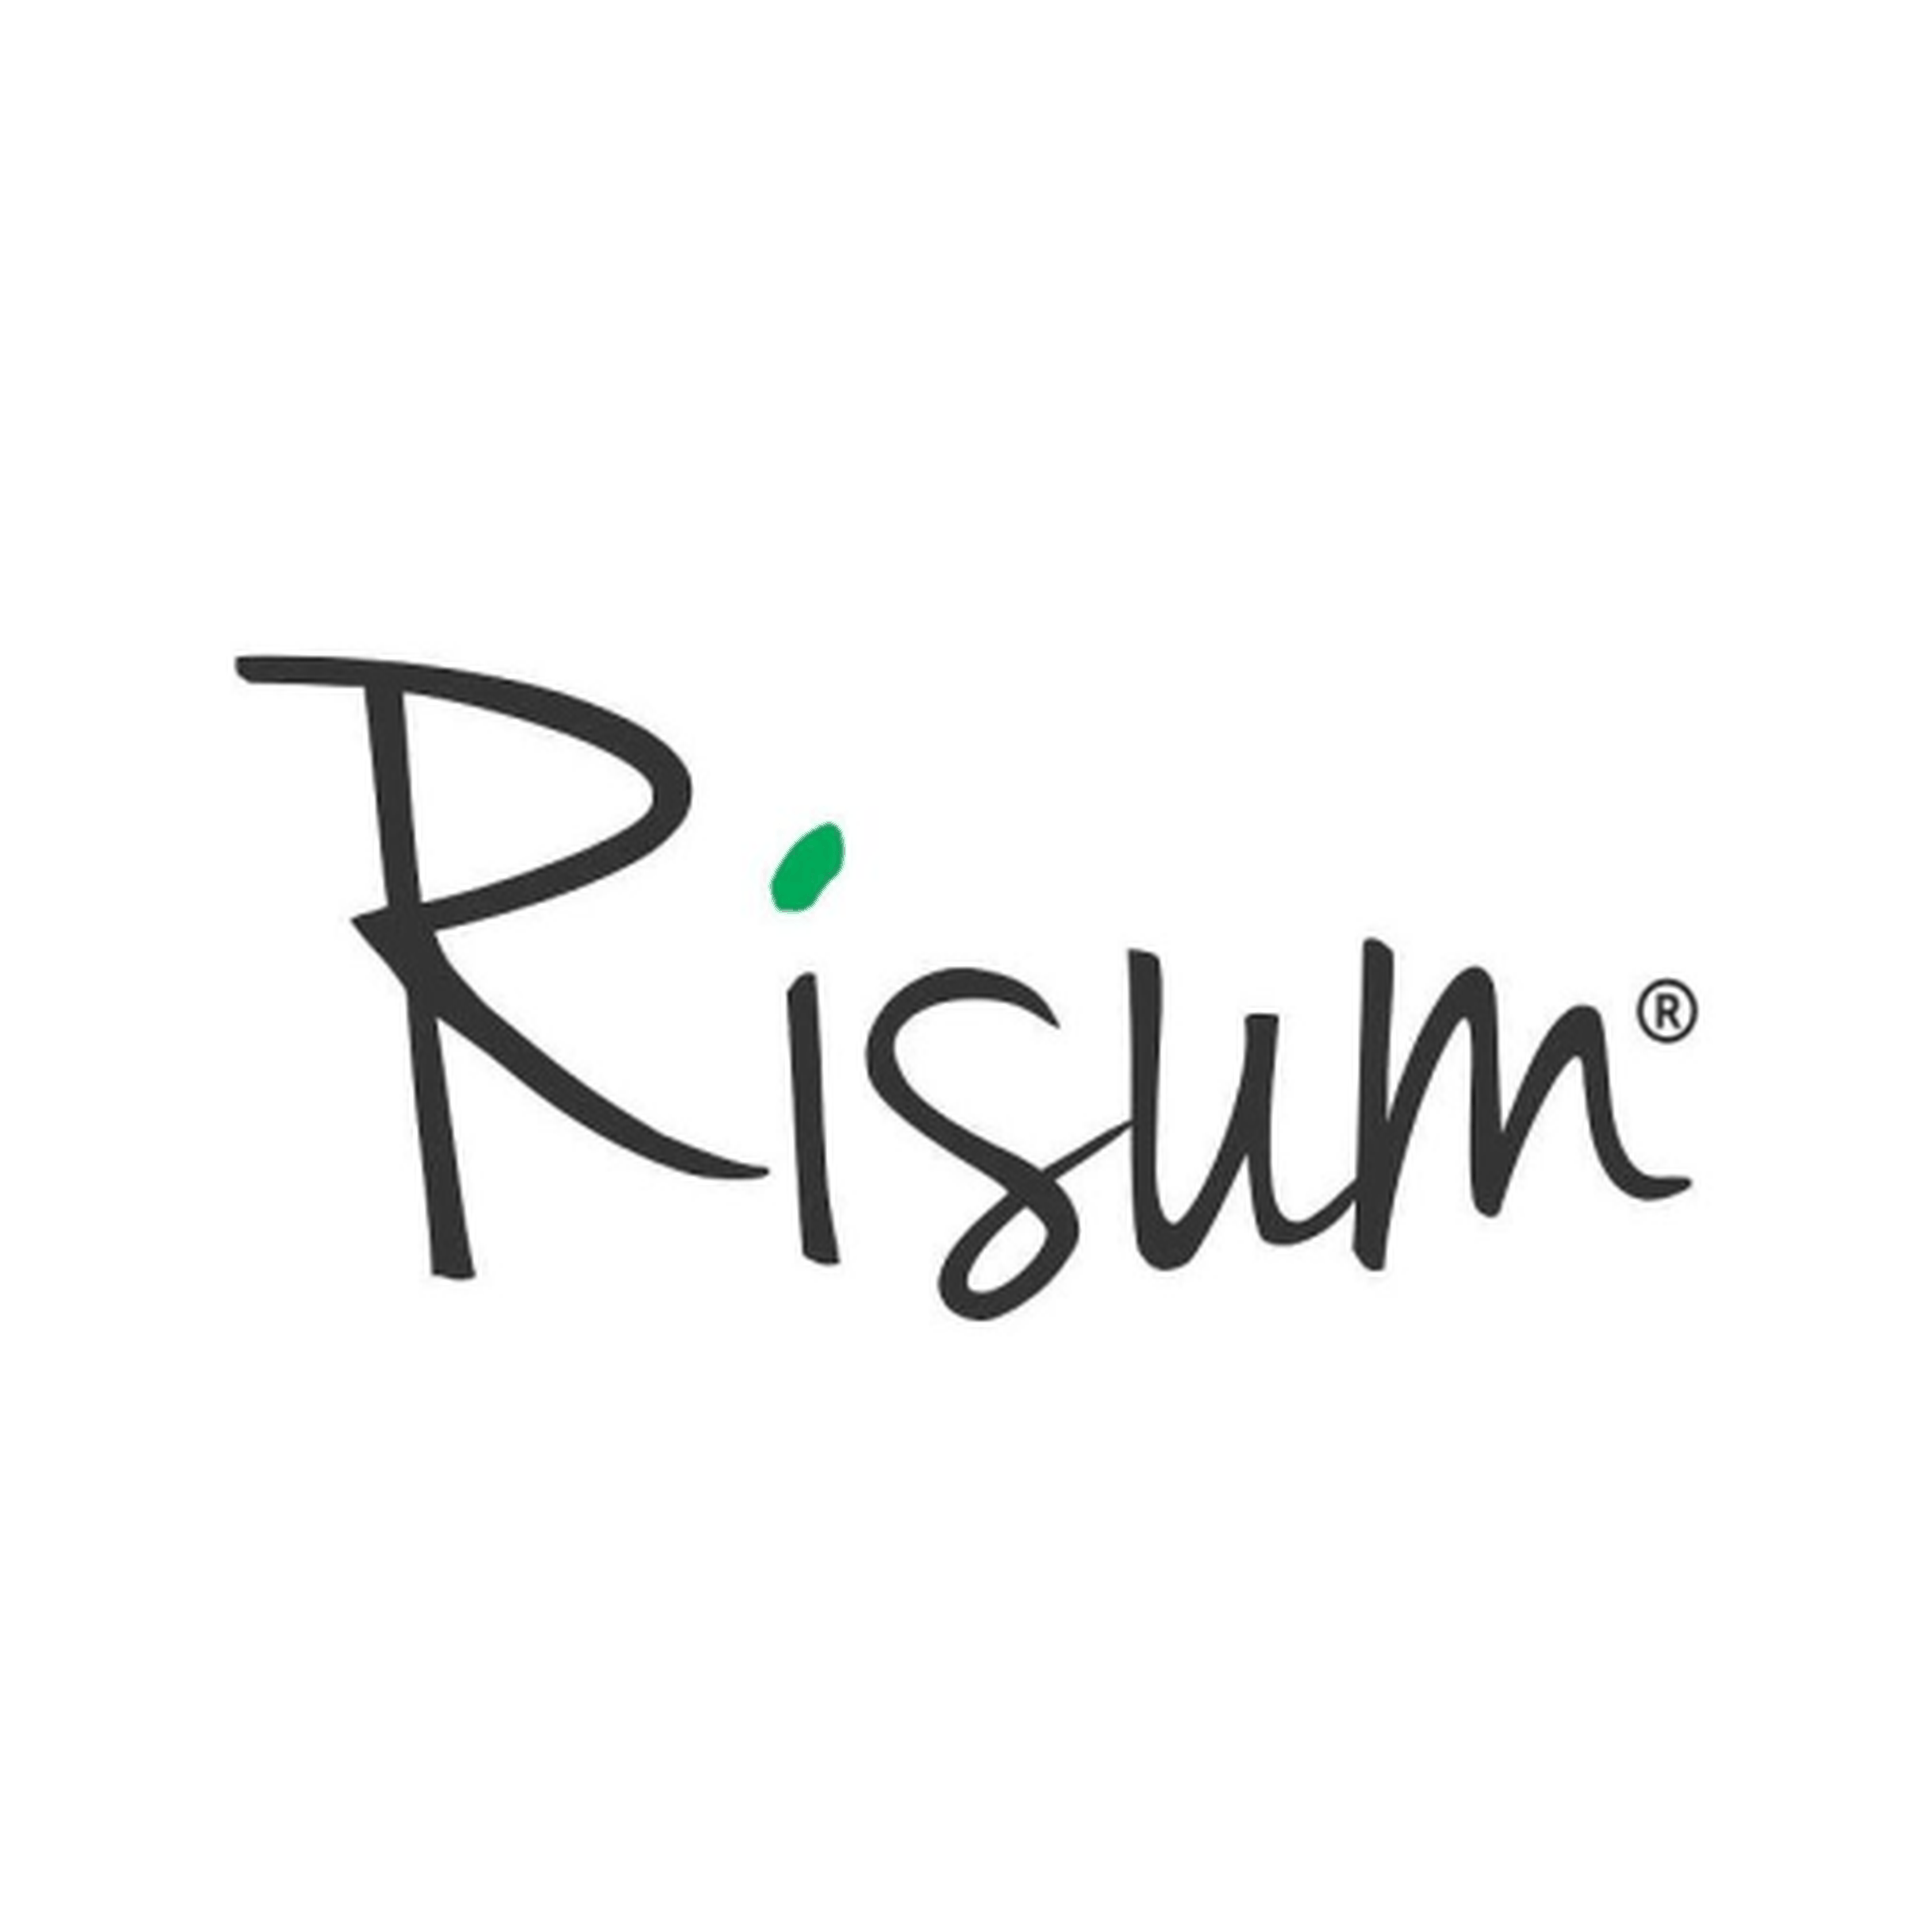 Deal maker. Risum. Risum logo. Ready stock. Le Glints.